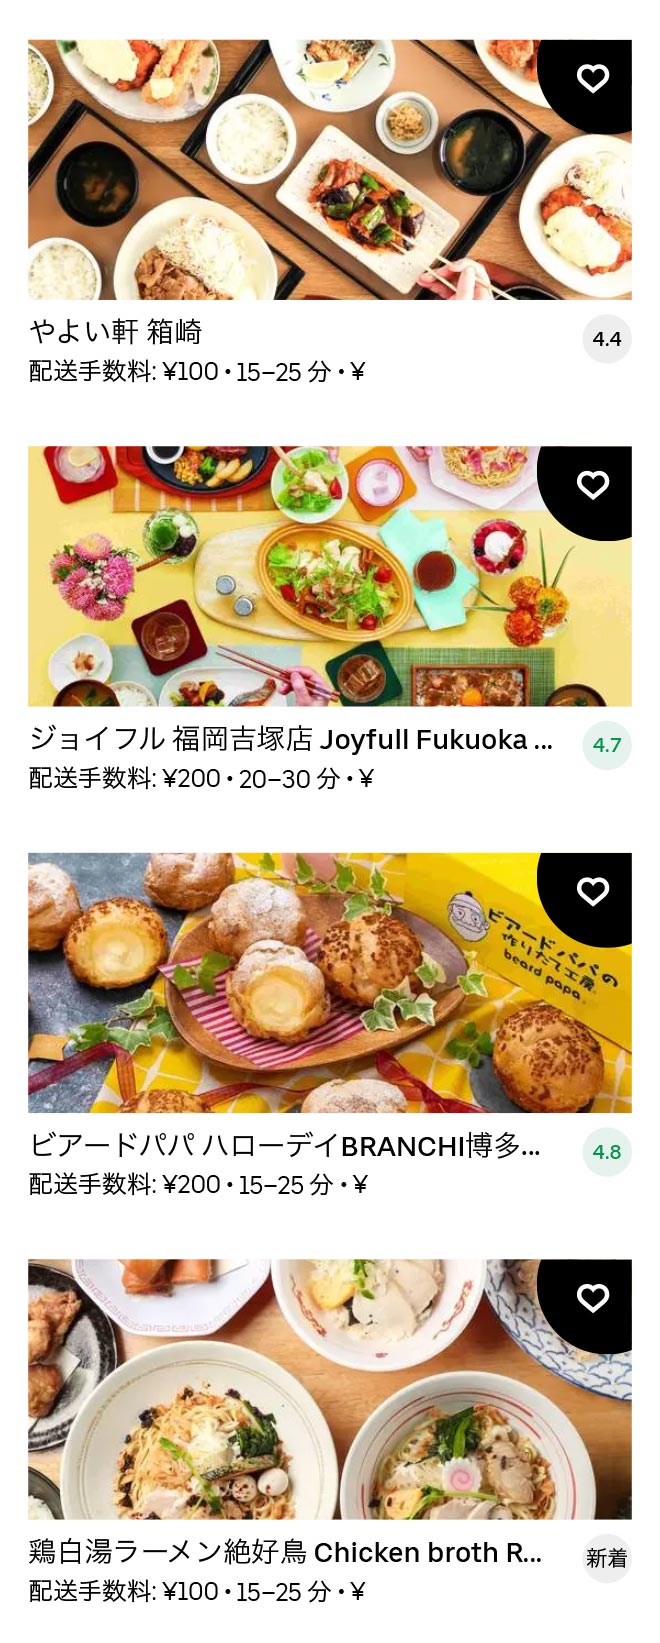 Hakozaki menu 2101 08